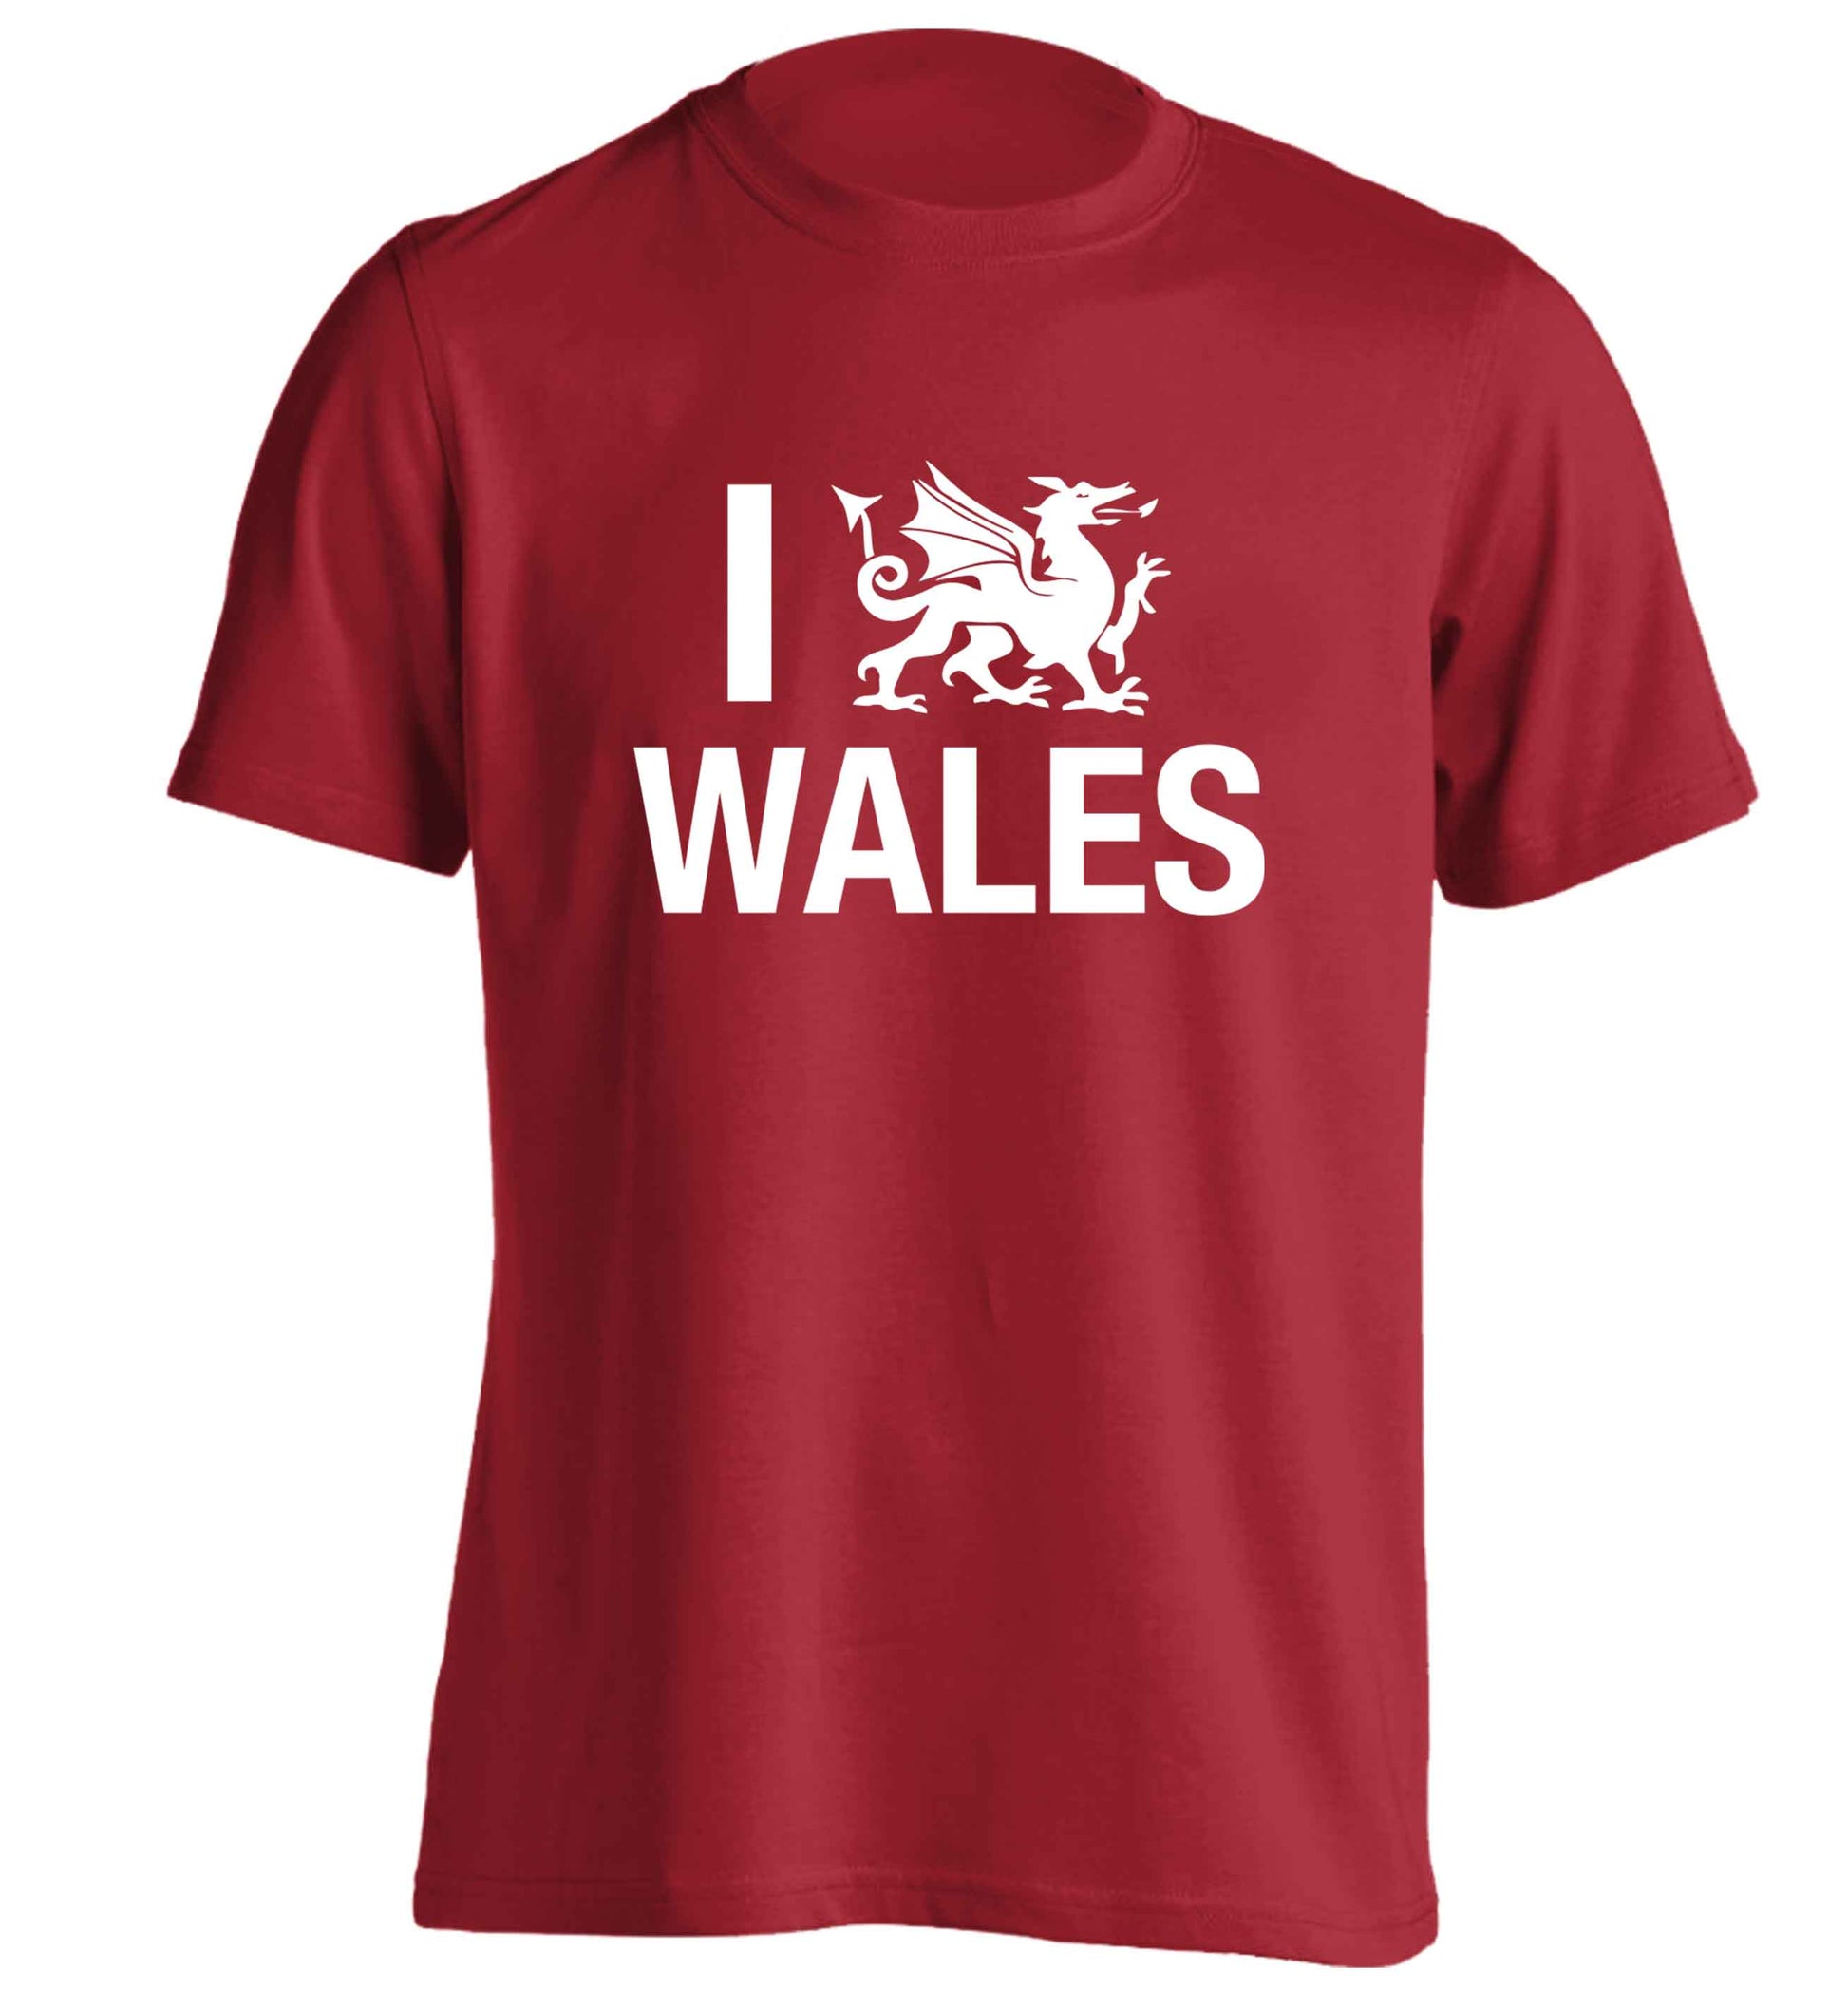 I love Wales adults unisex red Tshirt 2XL